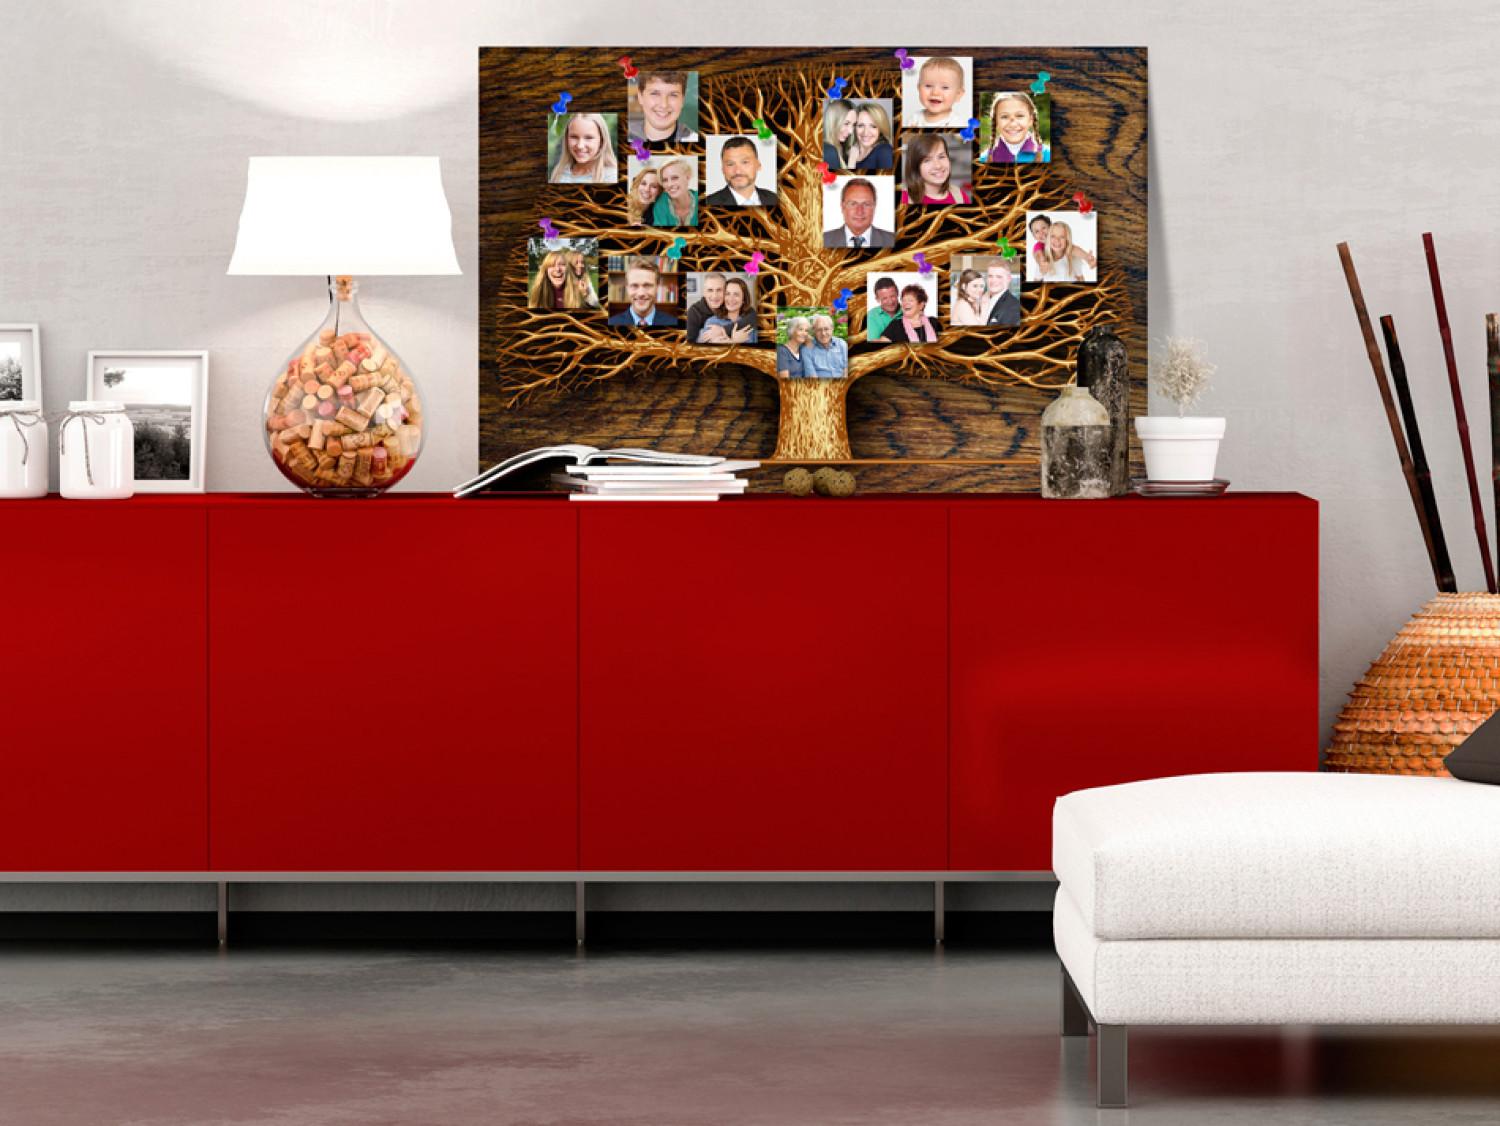 Tablero decorativo en corcho Family's Tree [Corkboard]